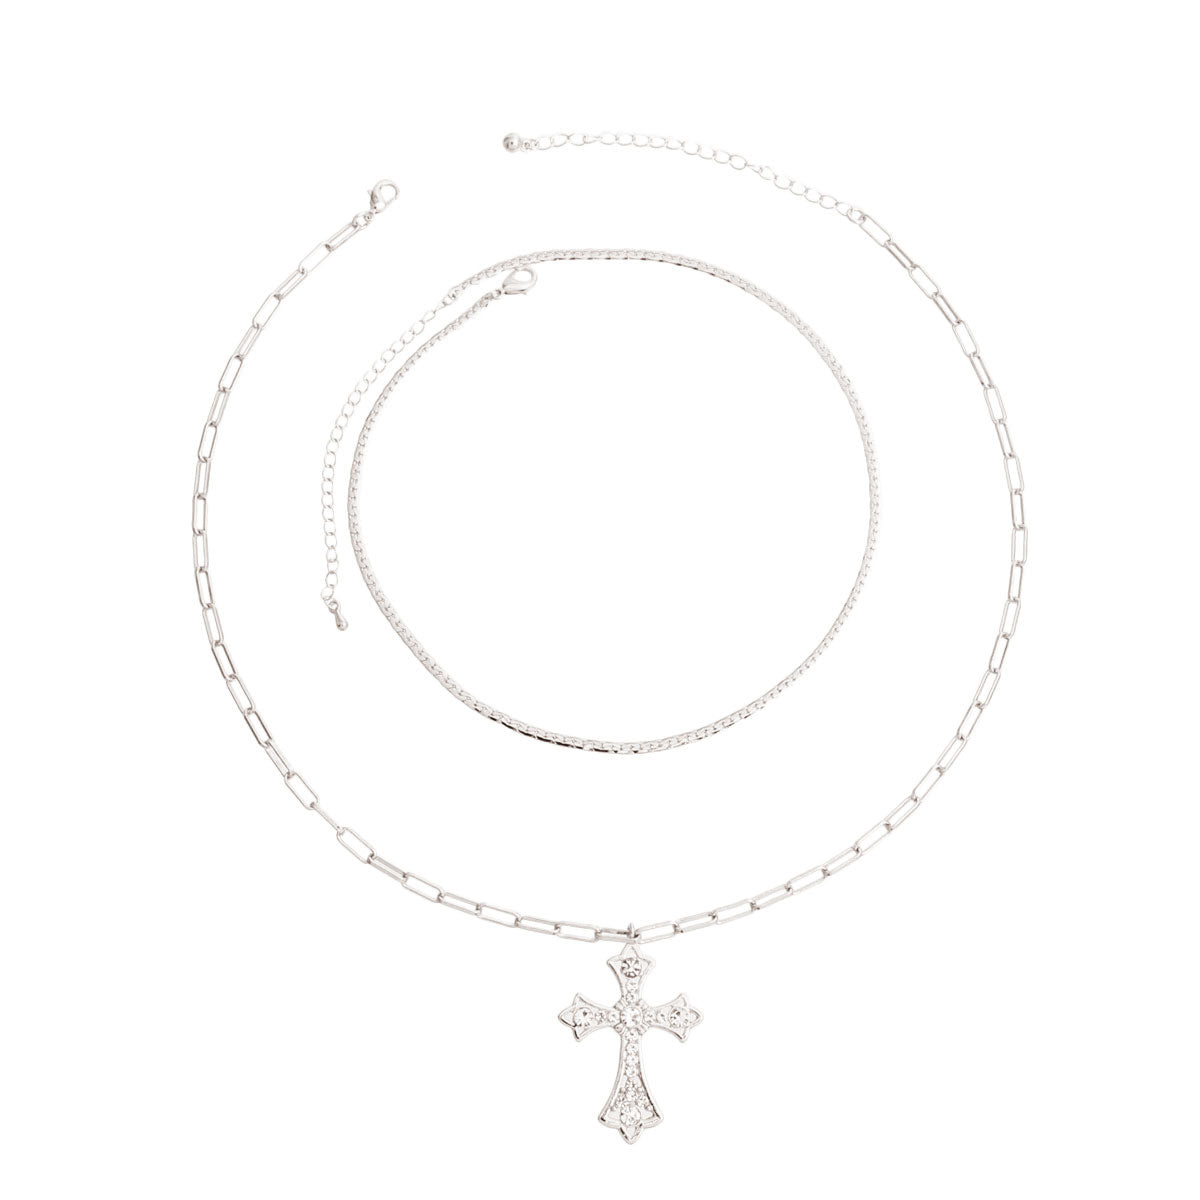 Silver Syriac Cross 2 Pcs Necklace